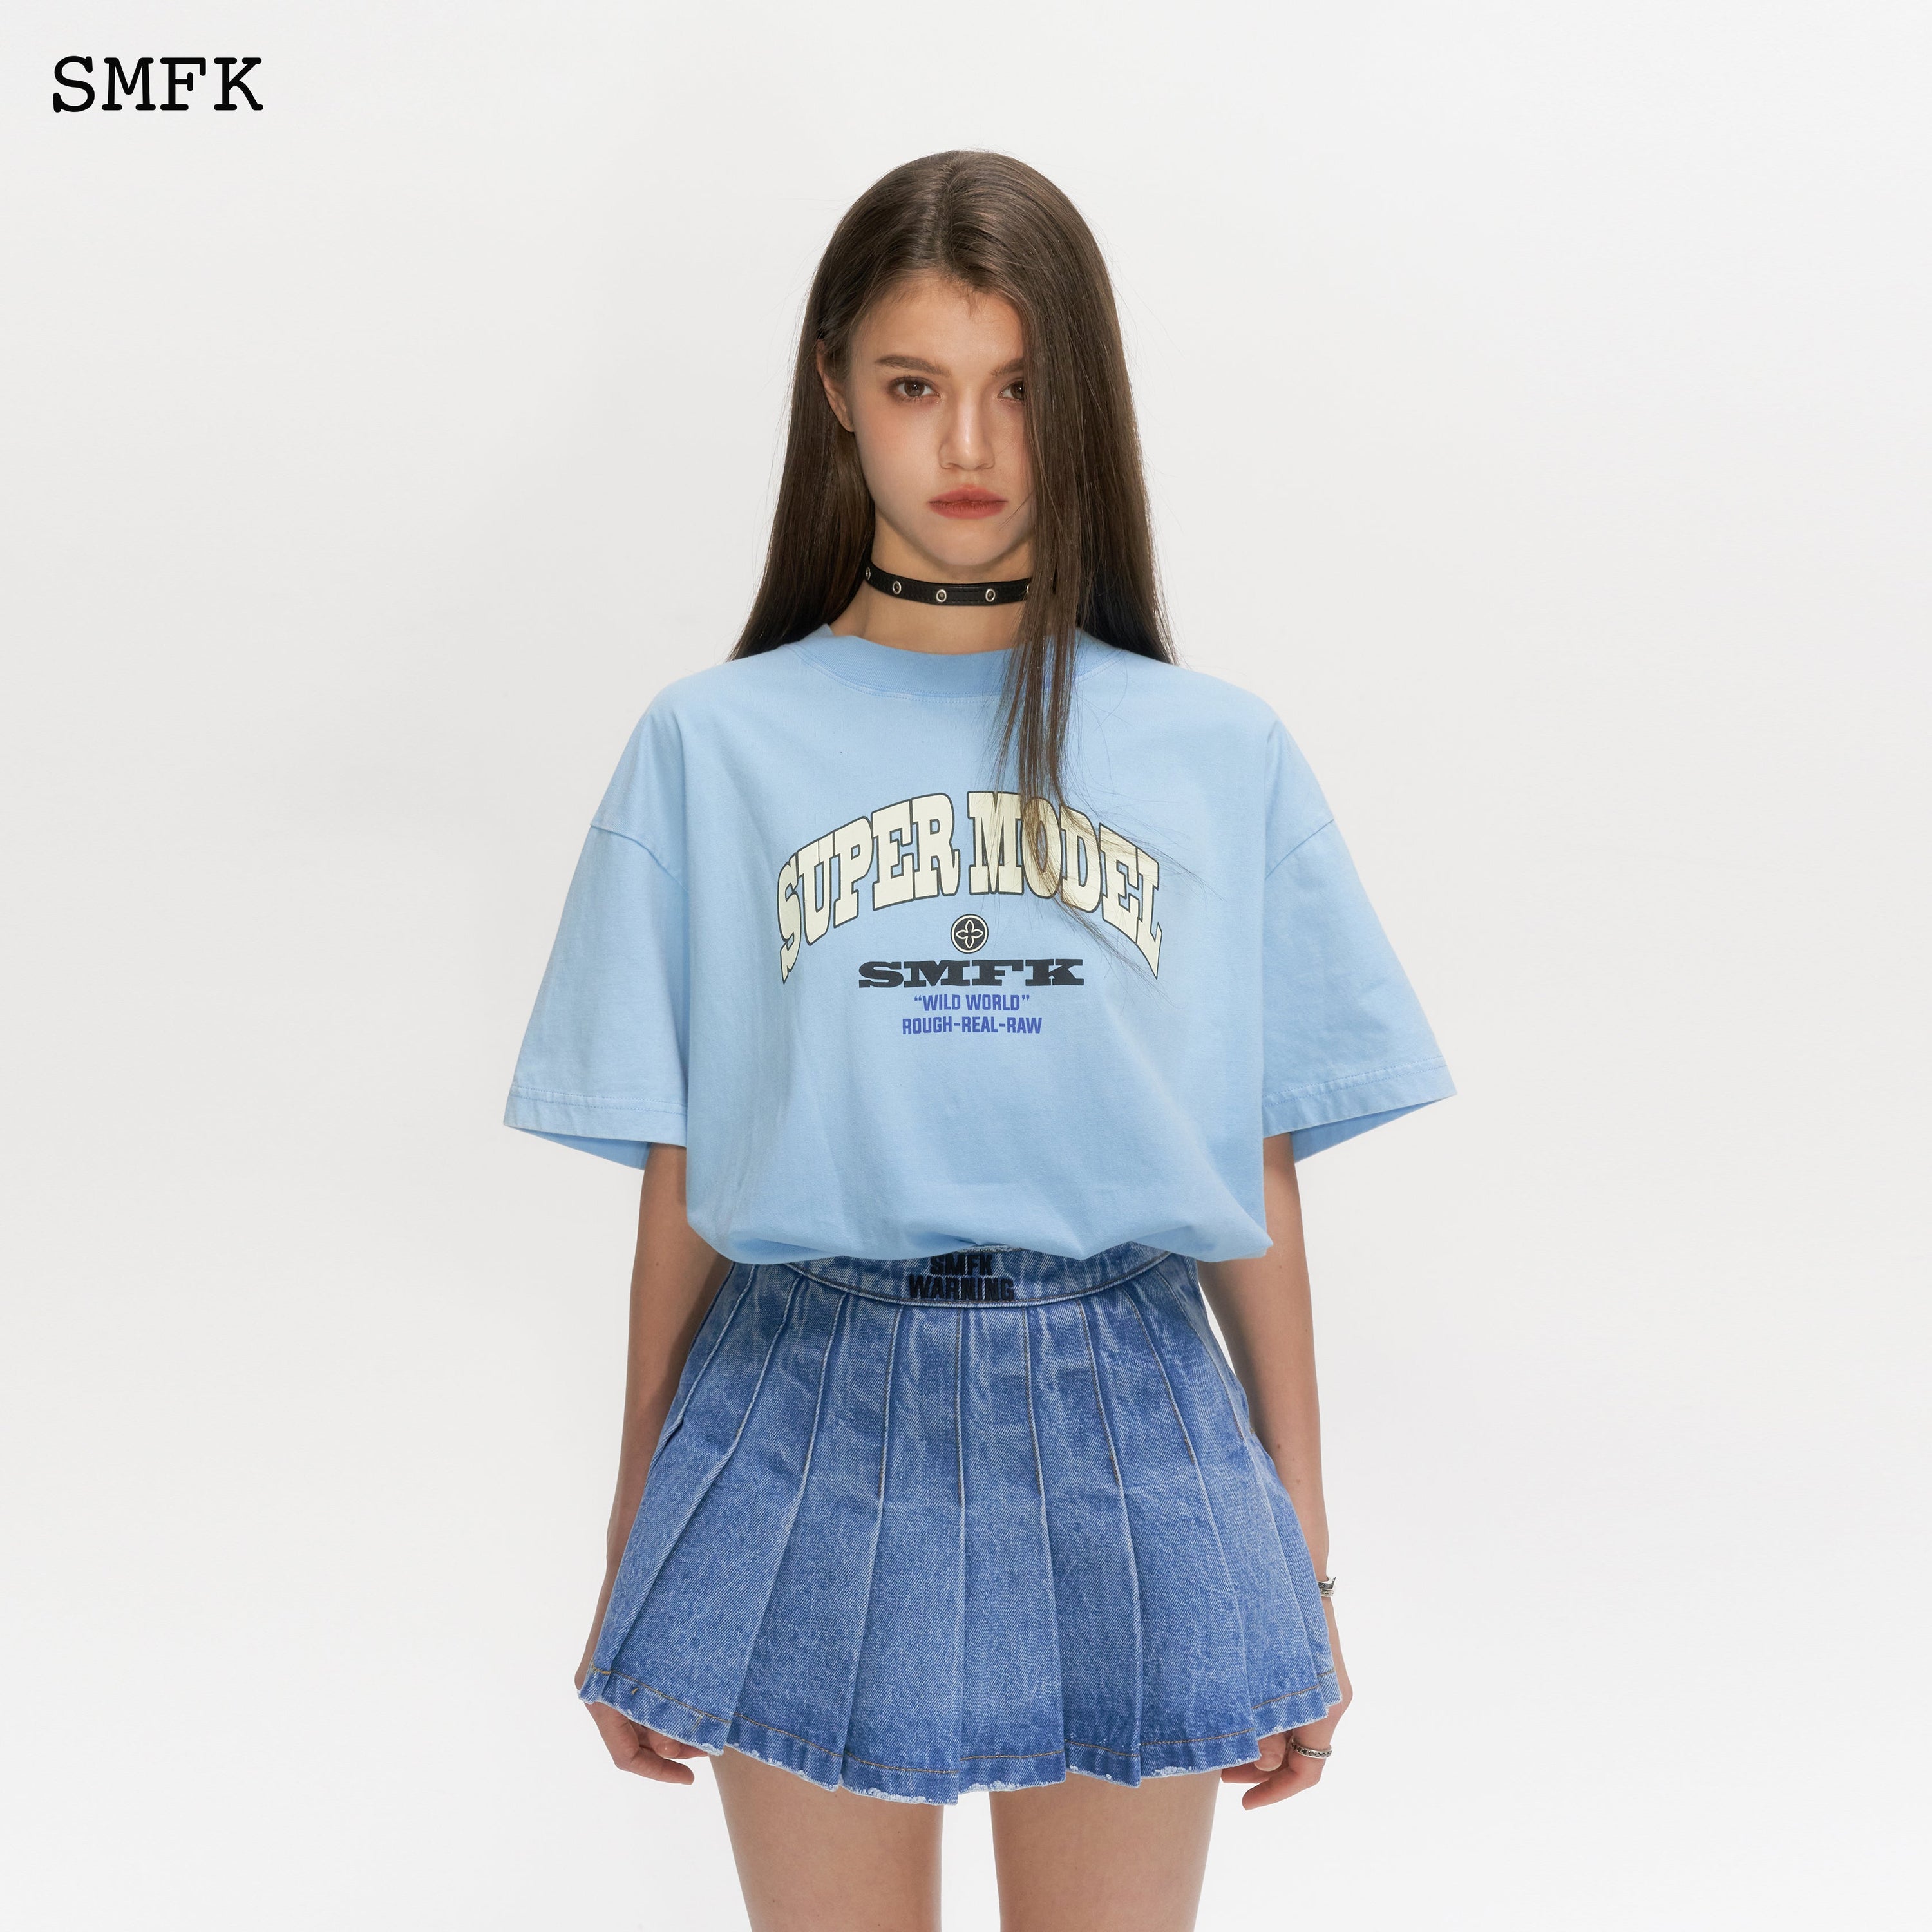 Oversized Super Model Blue T-shirt - SMFK Official